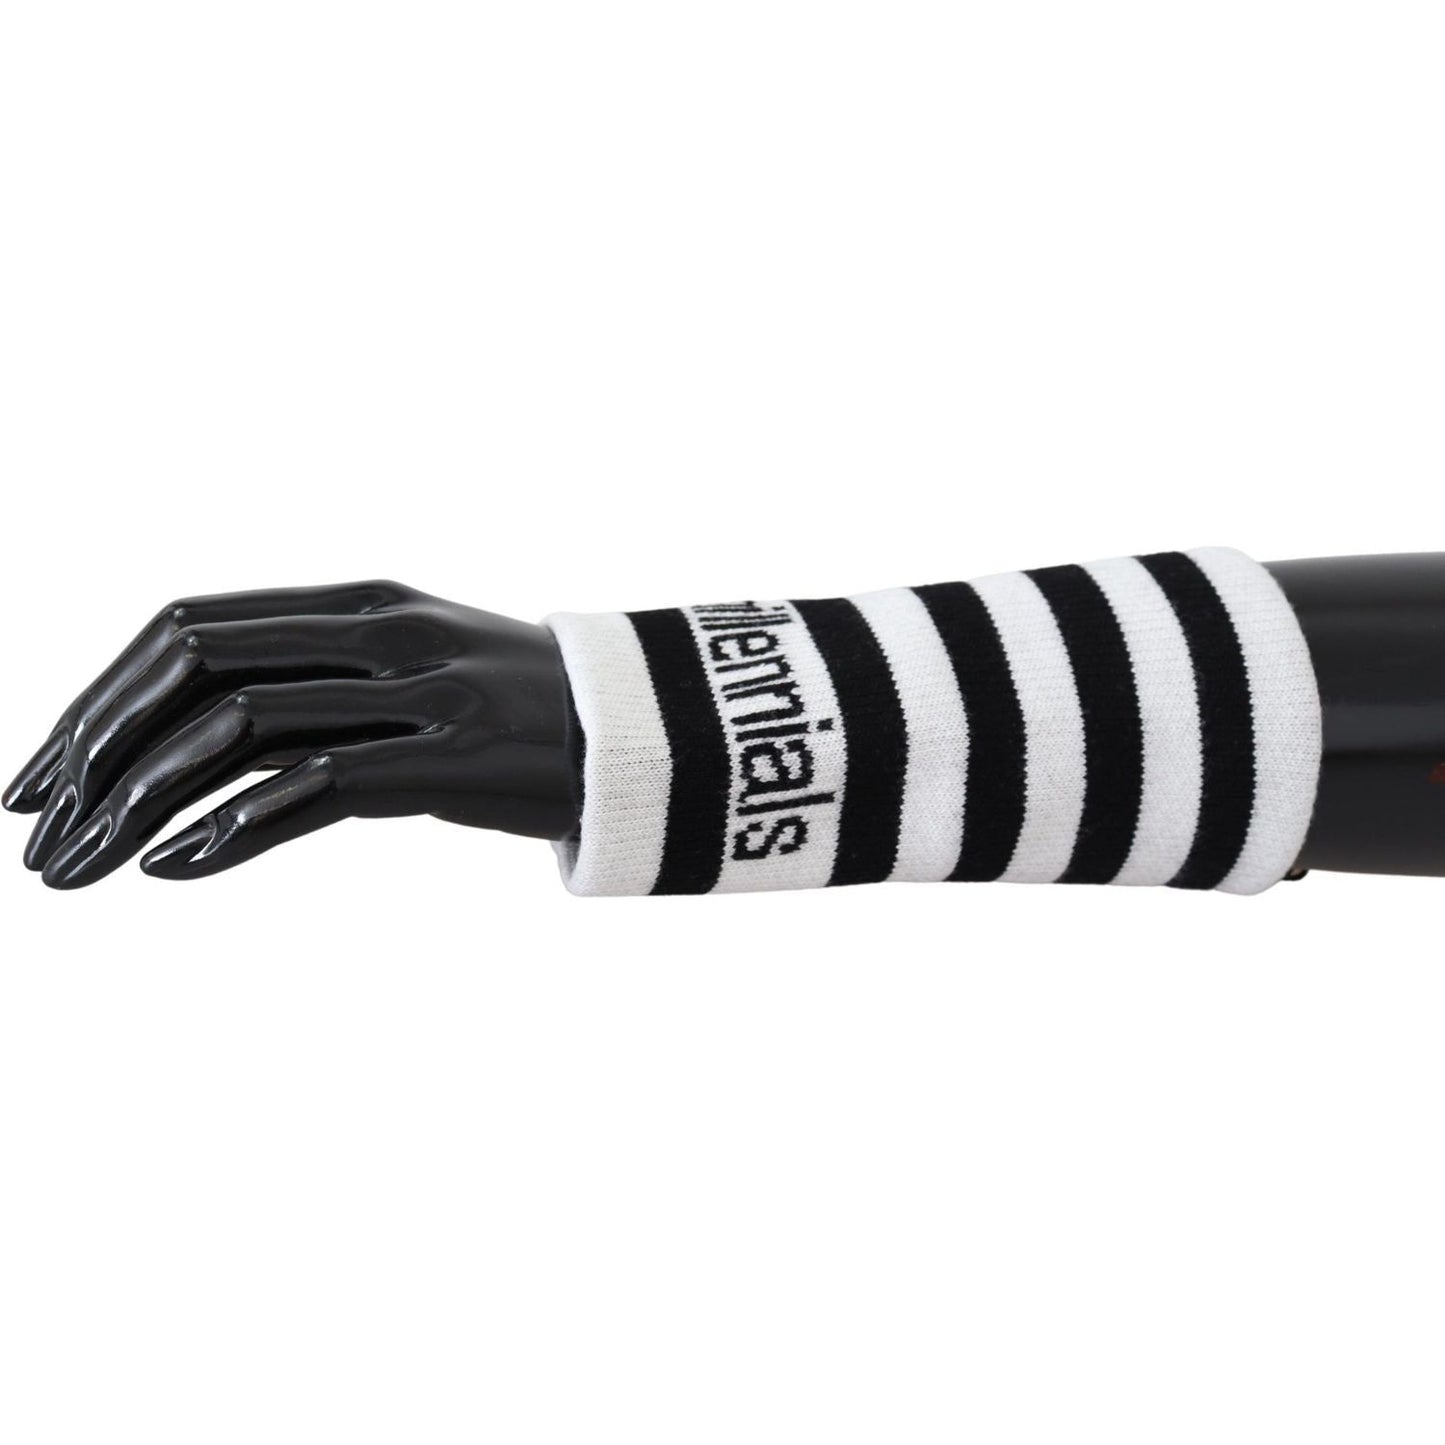 Elegant Black & White Wool Blend Wrist Wrap